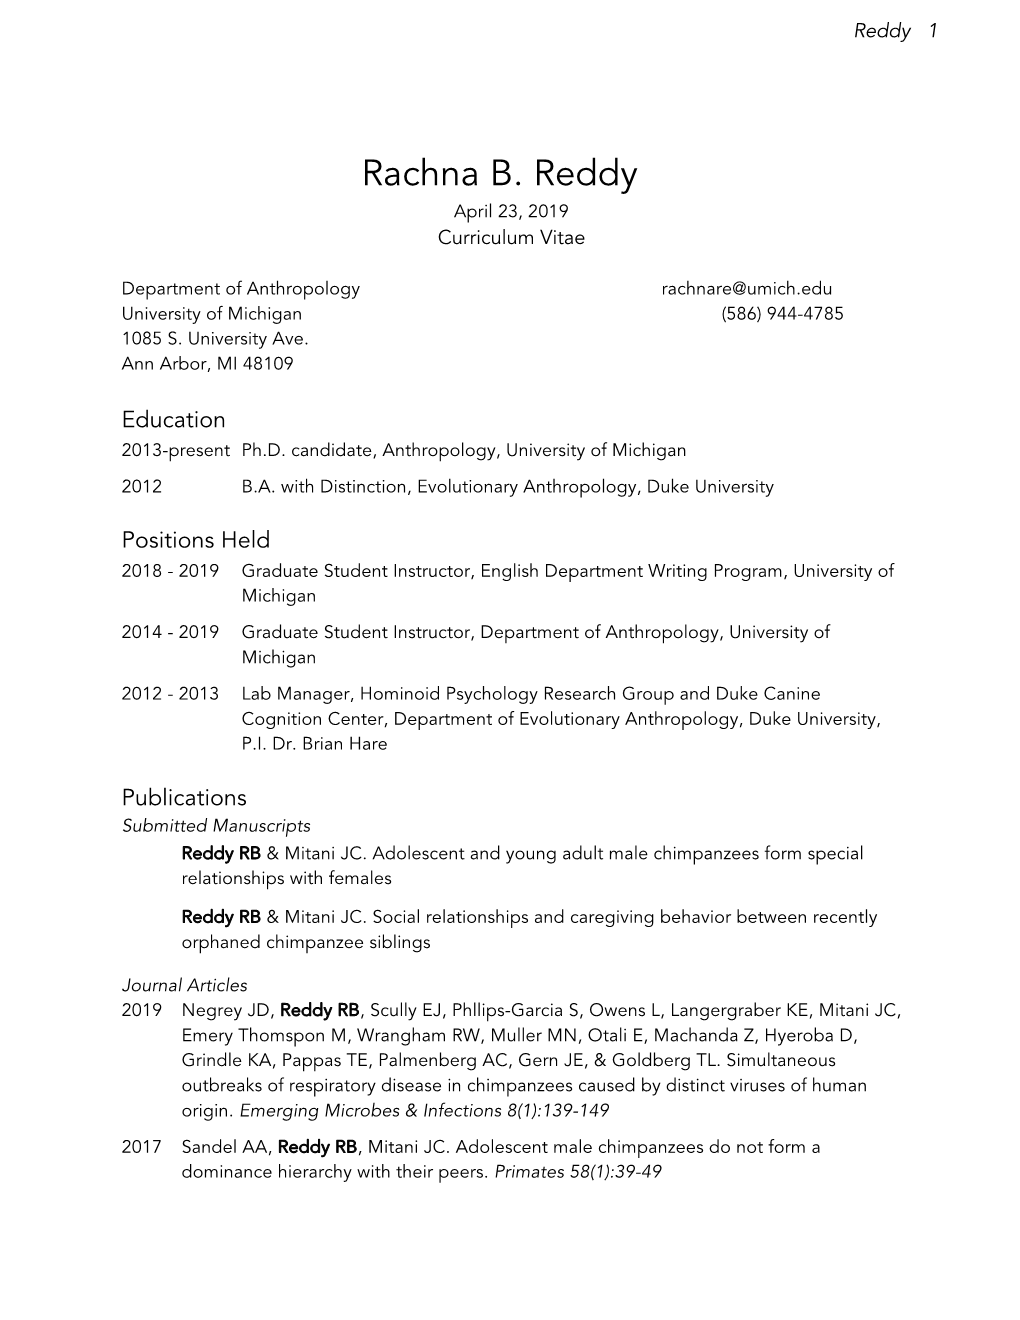 Rachna B. Reddy April 23, 2019 Curriculum Vitae